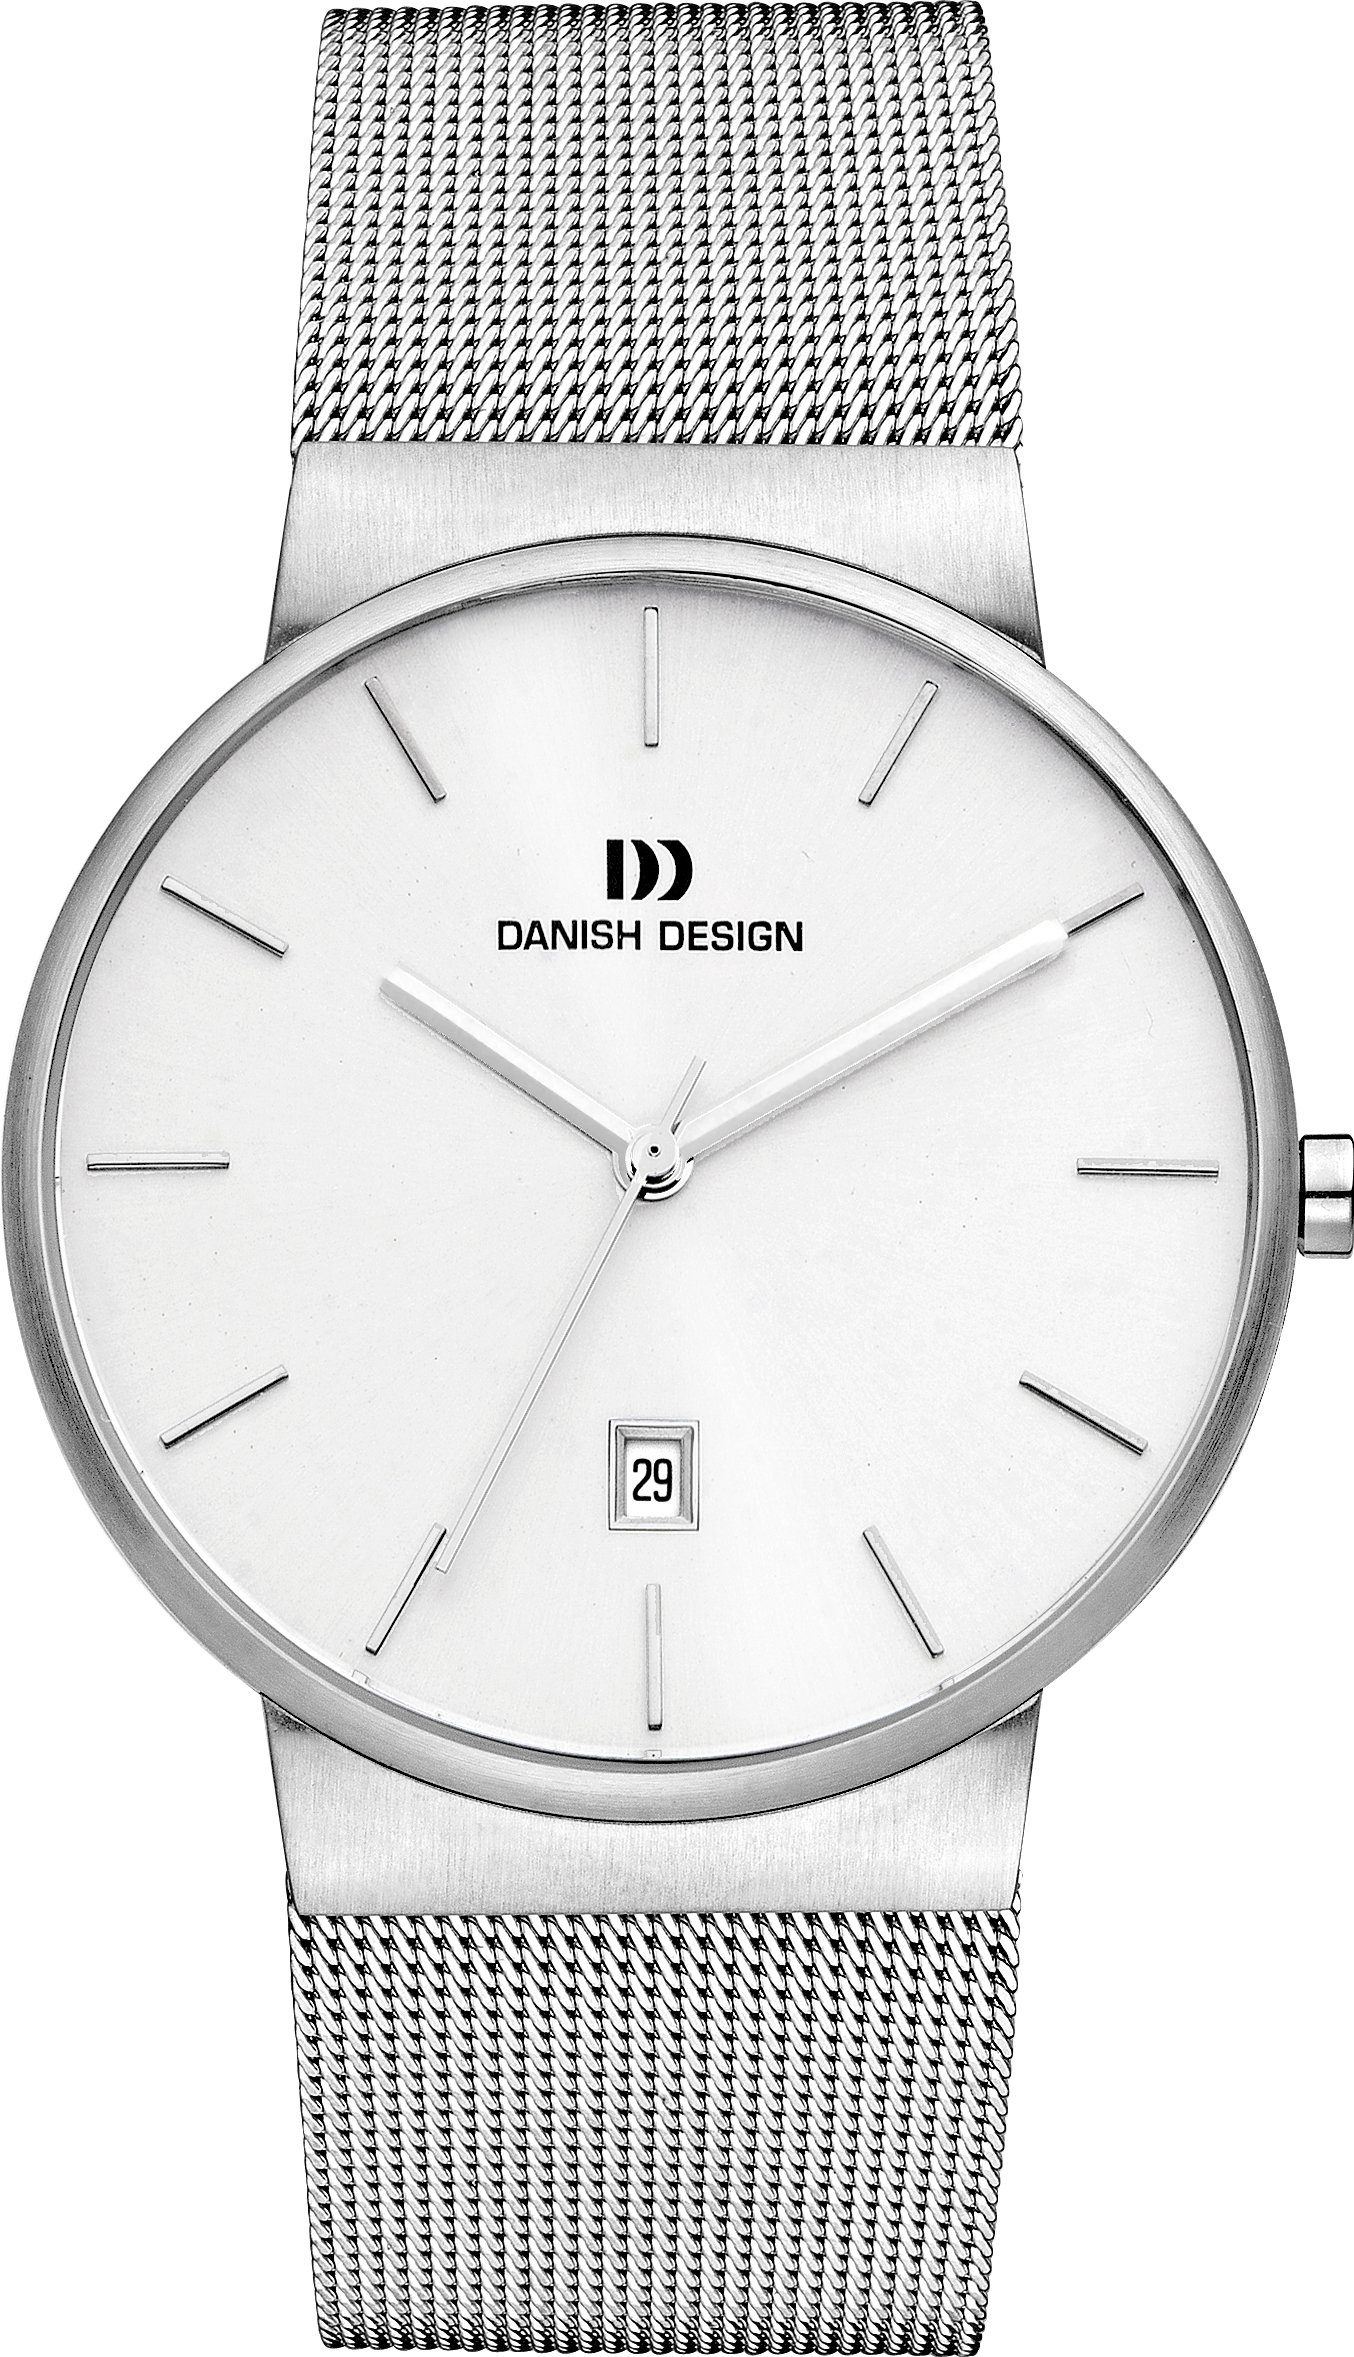 Datum Designuhr Danish Datum Uhr 40mm, Silber bei Design 6 mit Herren Quarzuhr TAGE